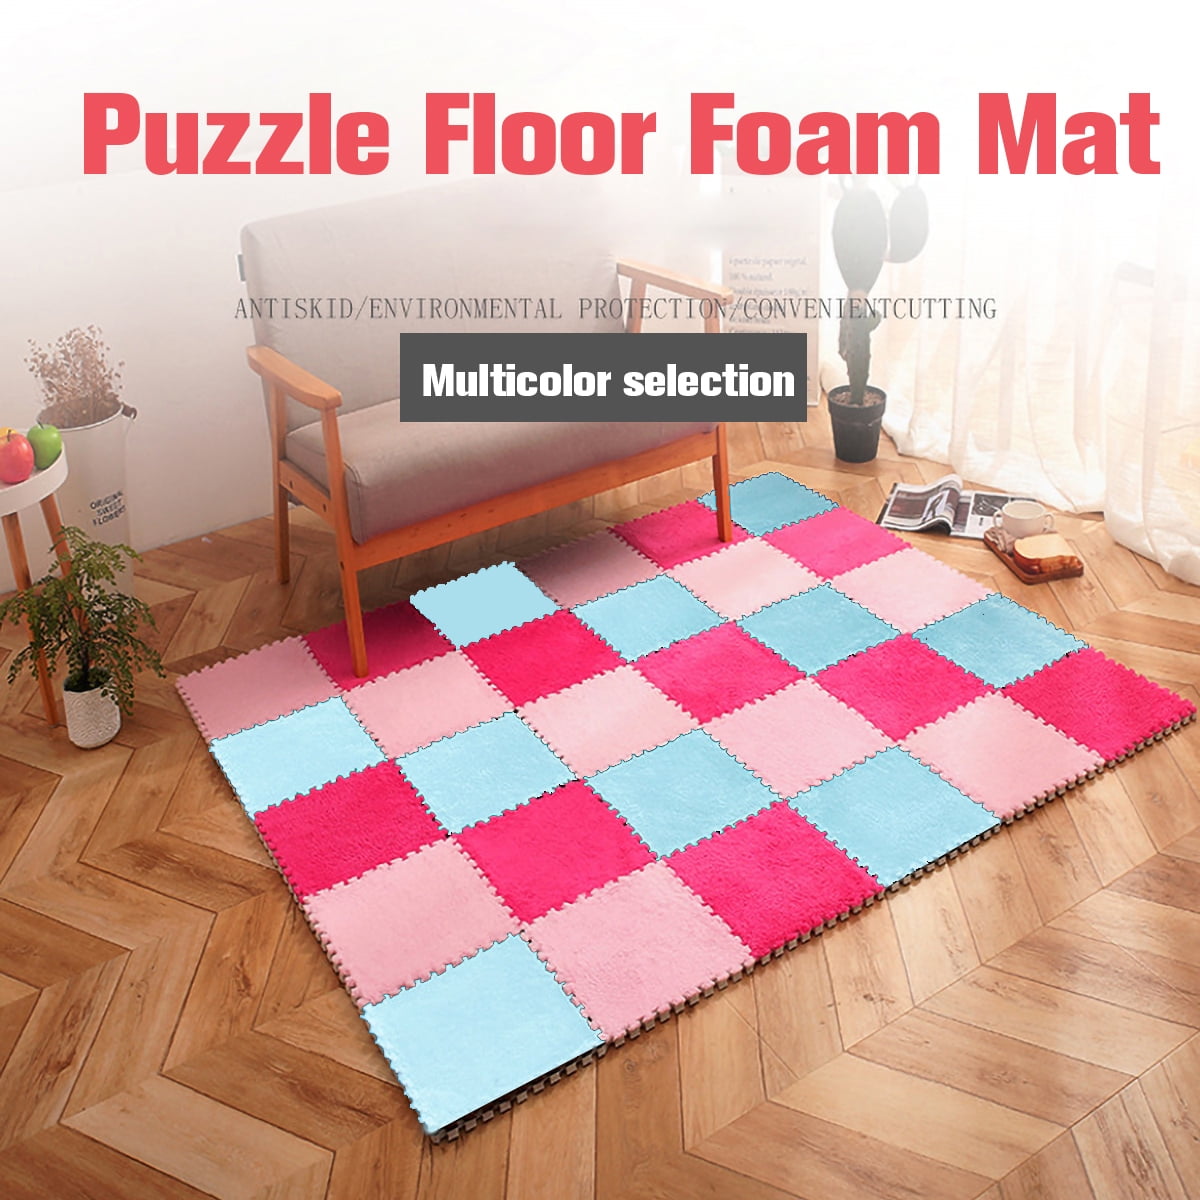 Exercise Floor Puzzle Mat Carpet Bedroom Full Bedside Children